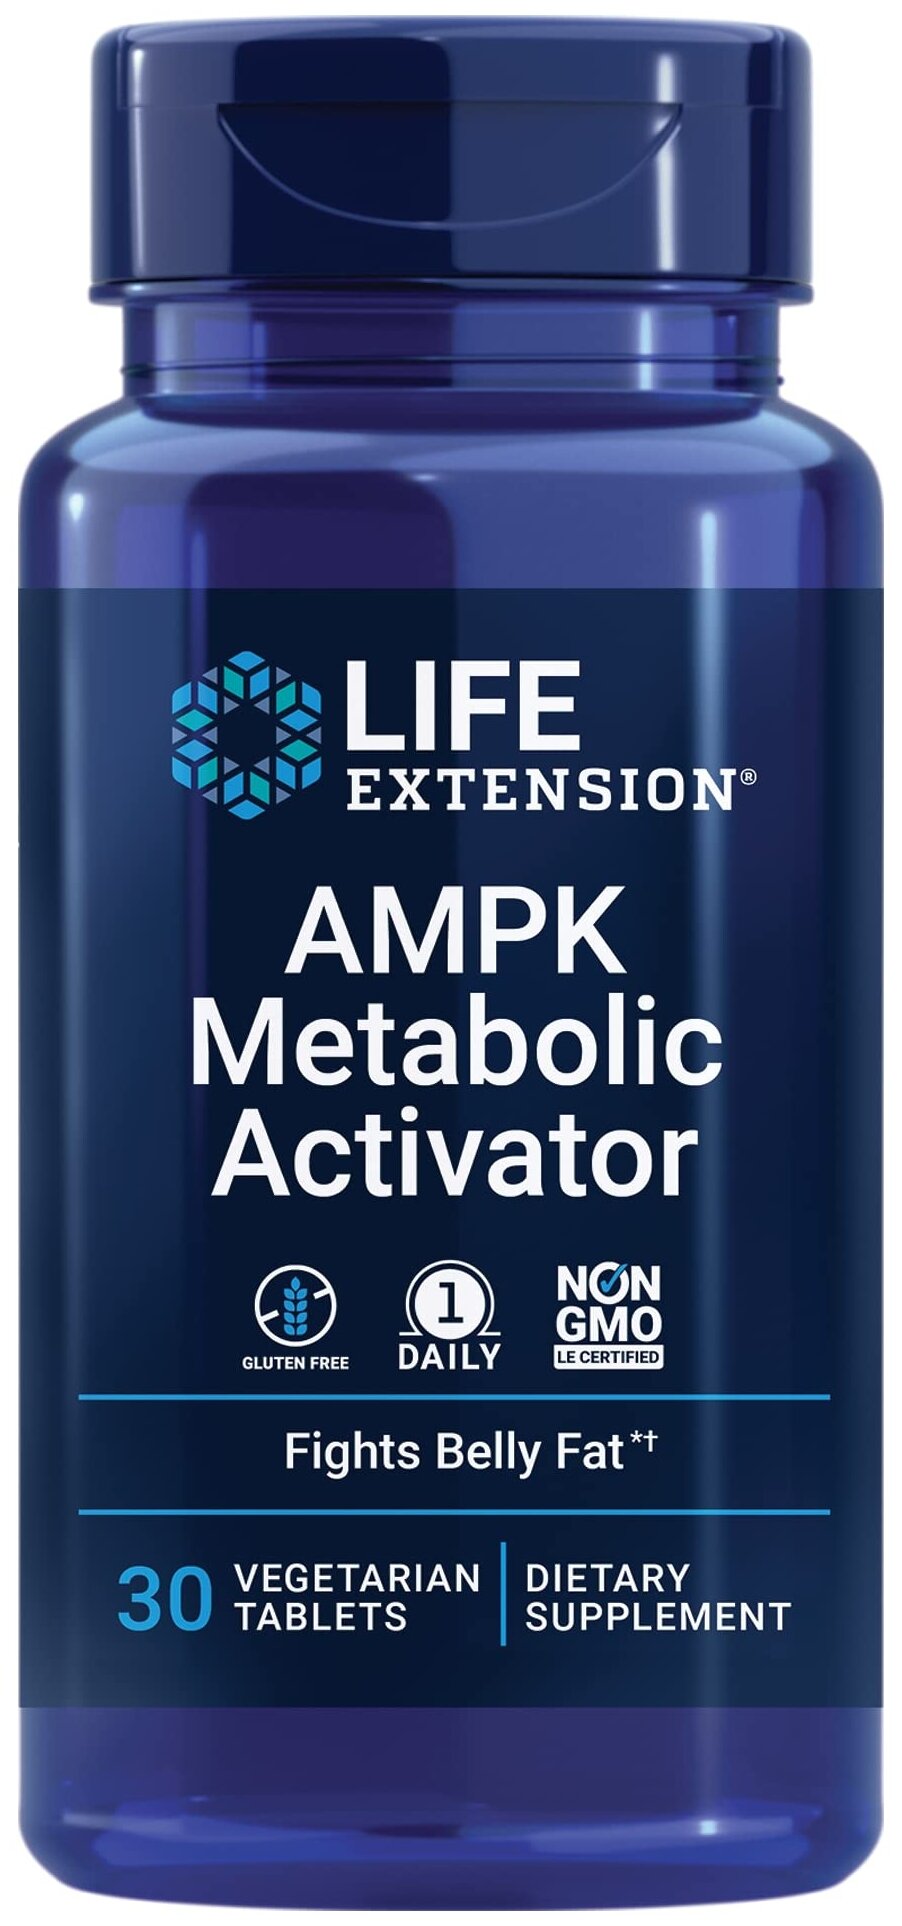 Таблетки Life Extension AMPK Metabolic Activator, 20 г, 30 шт.